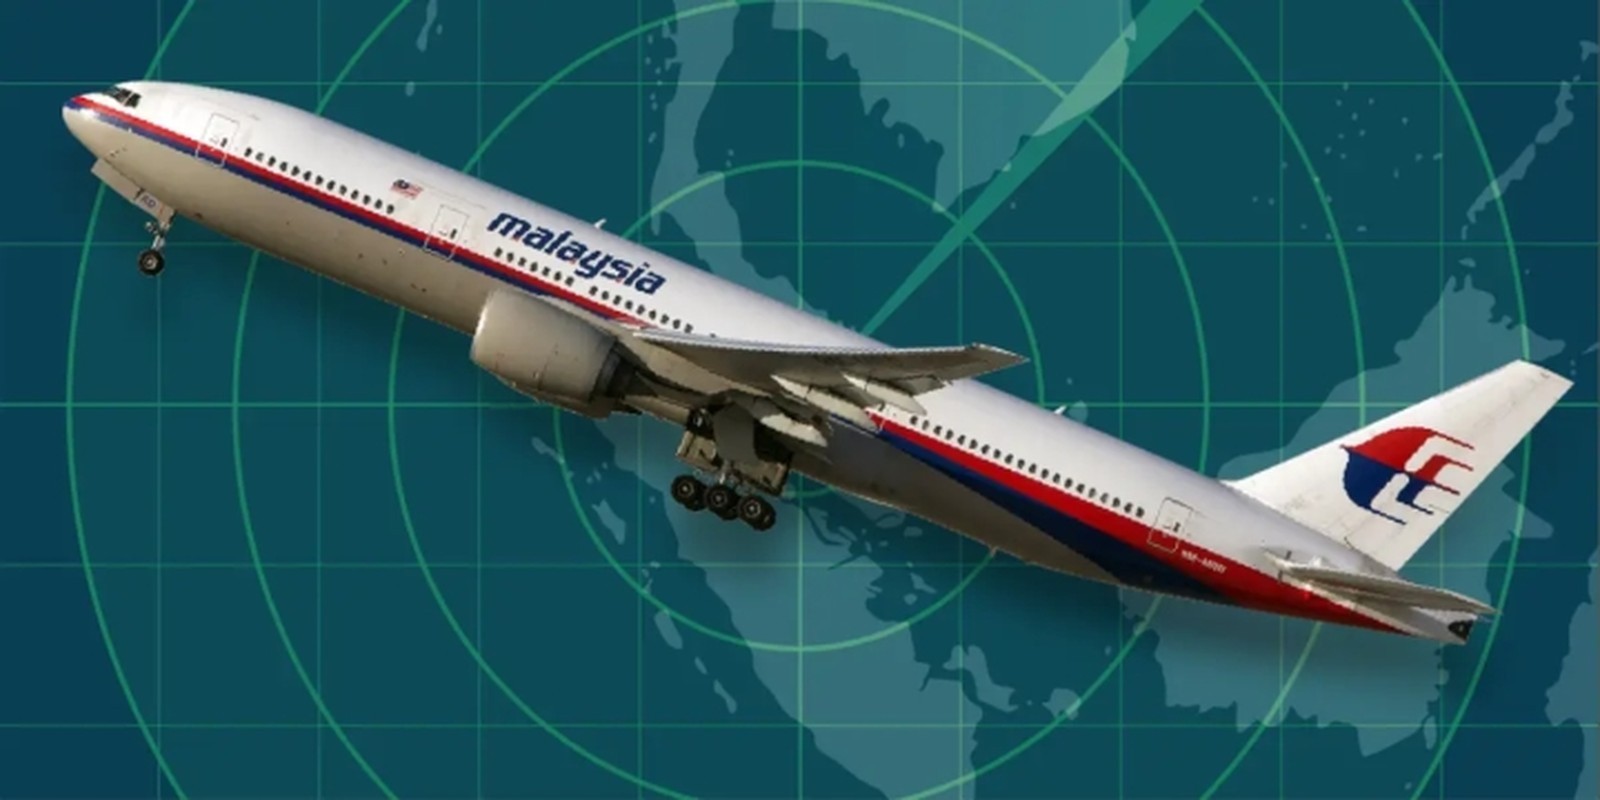 Tiet lo bat ngo “chia khoa” giup giai ma bi an may bay MH370